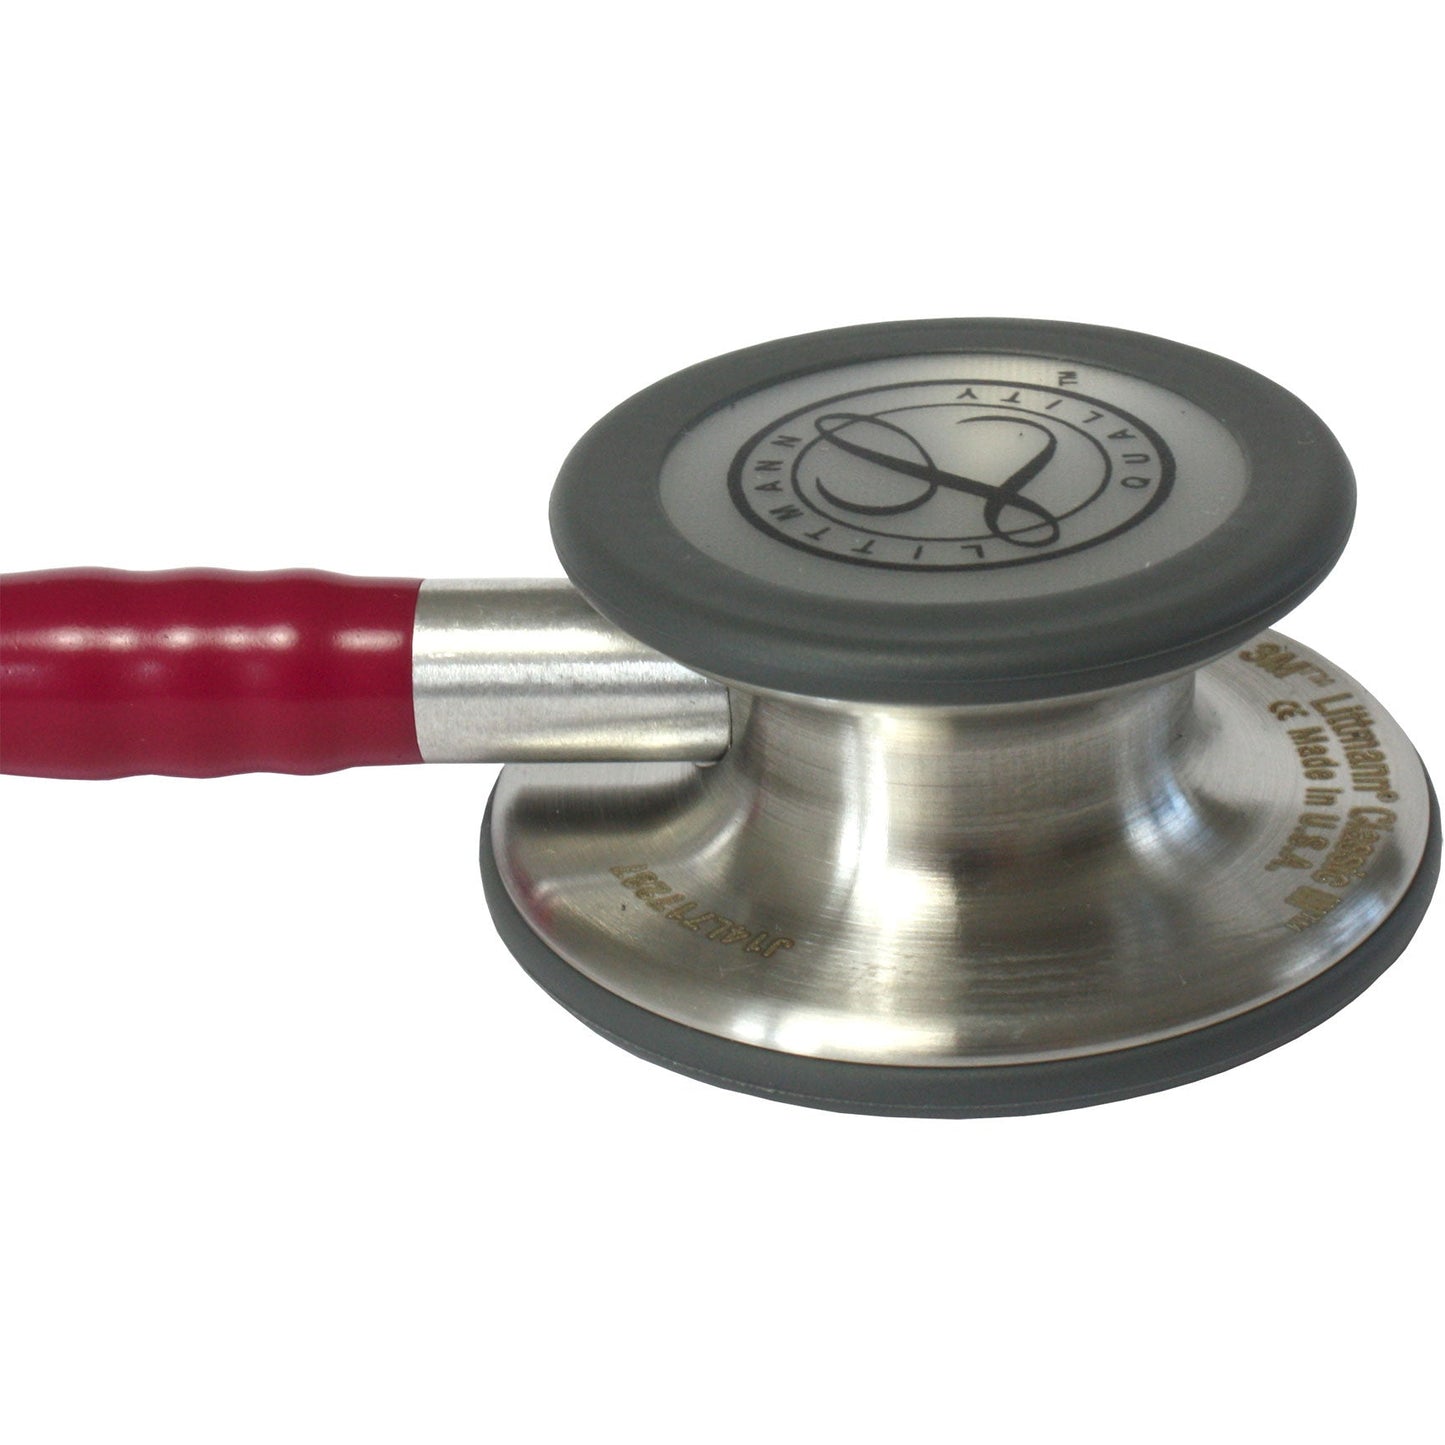 Littmann Classic III Stethoscope: Raspberry 5626